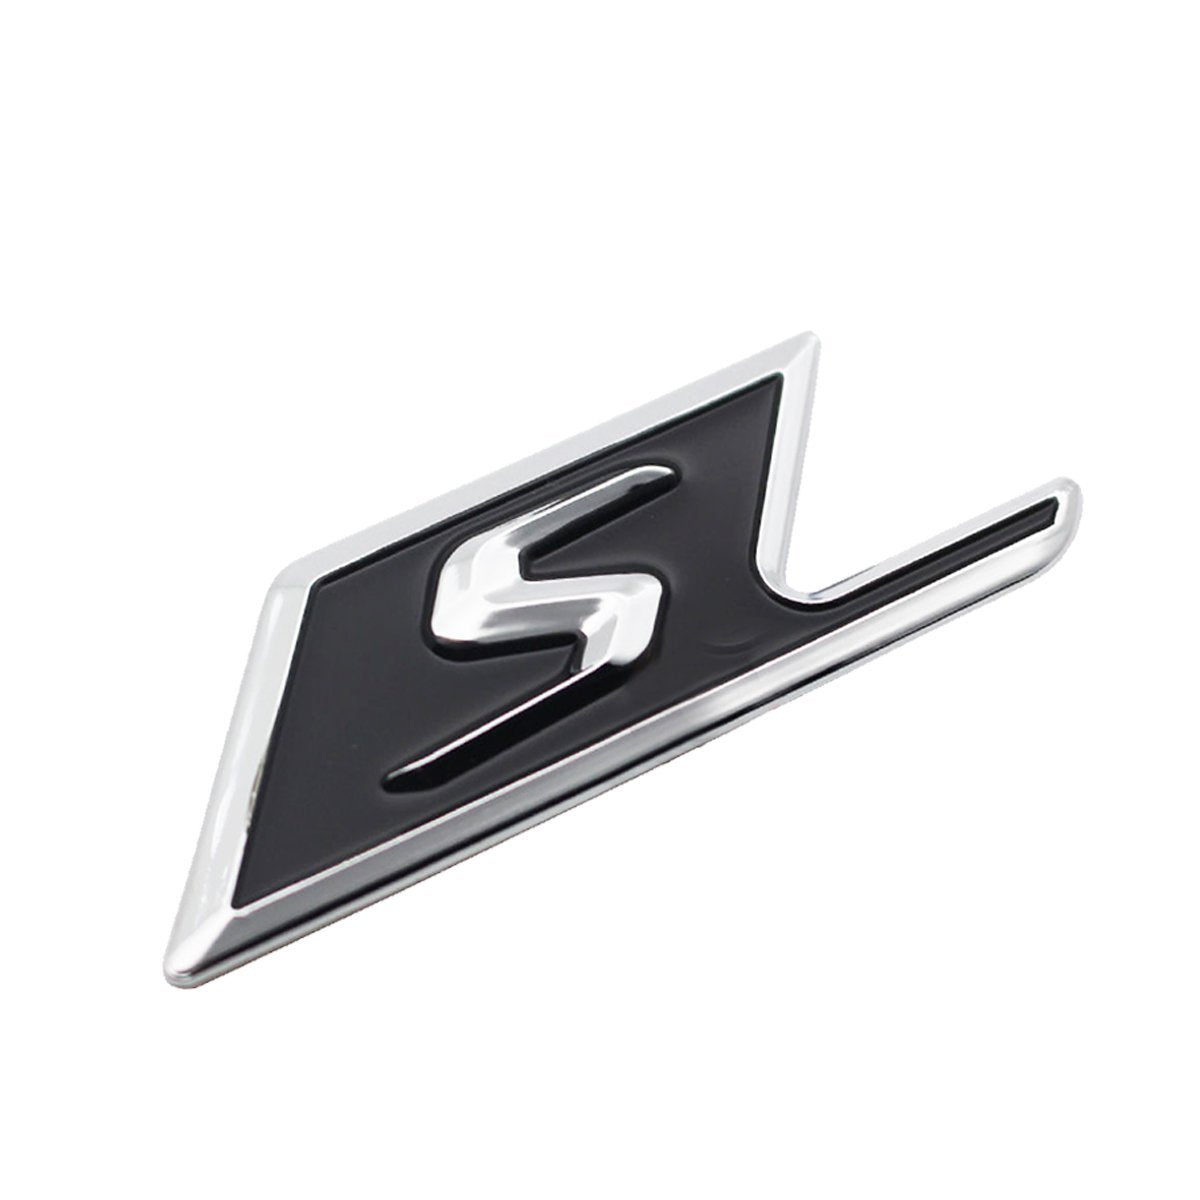 Mercedes-Benz star emblem sticker self-adhesive chrome logo adhesive 85 mm-  – Tacos Y Mas